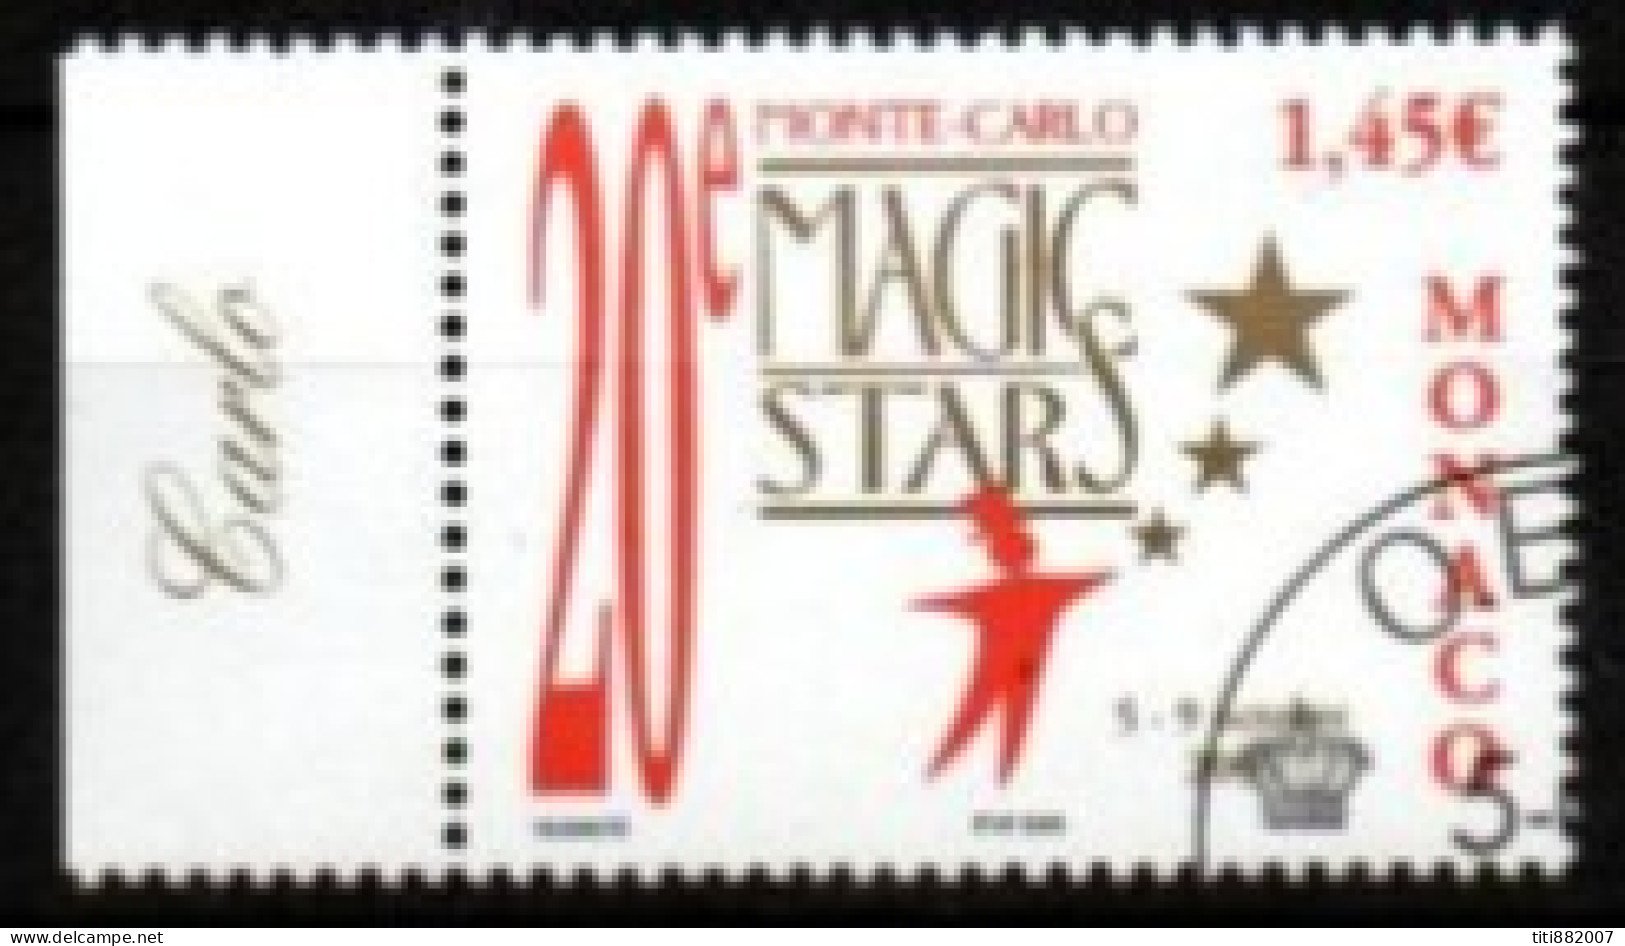 MONACO   -   2005 .   Y&T N° 2503 Oblitéré.   Magic Stars - Used Stamps